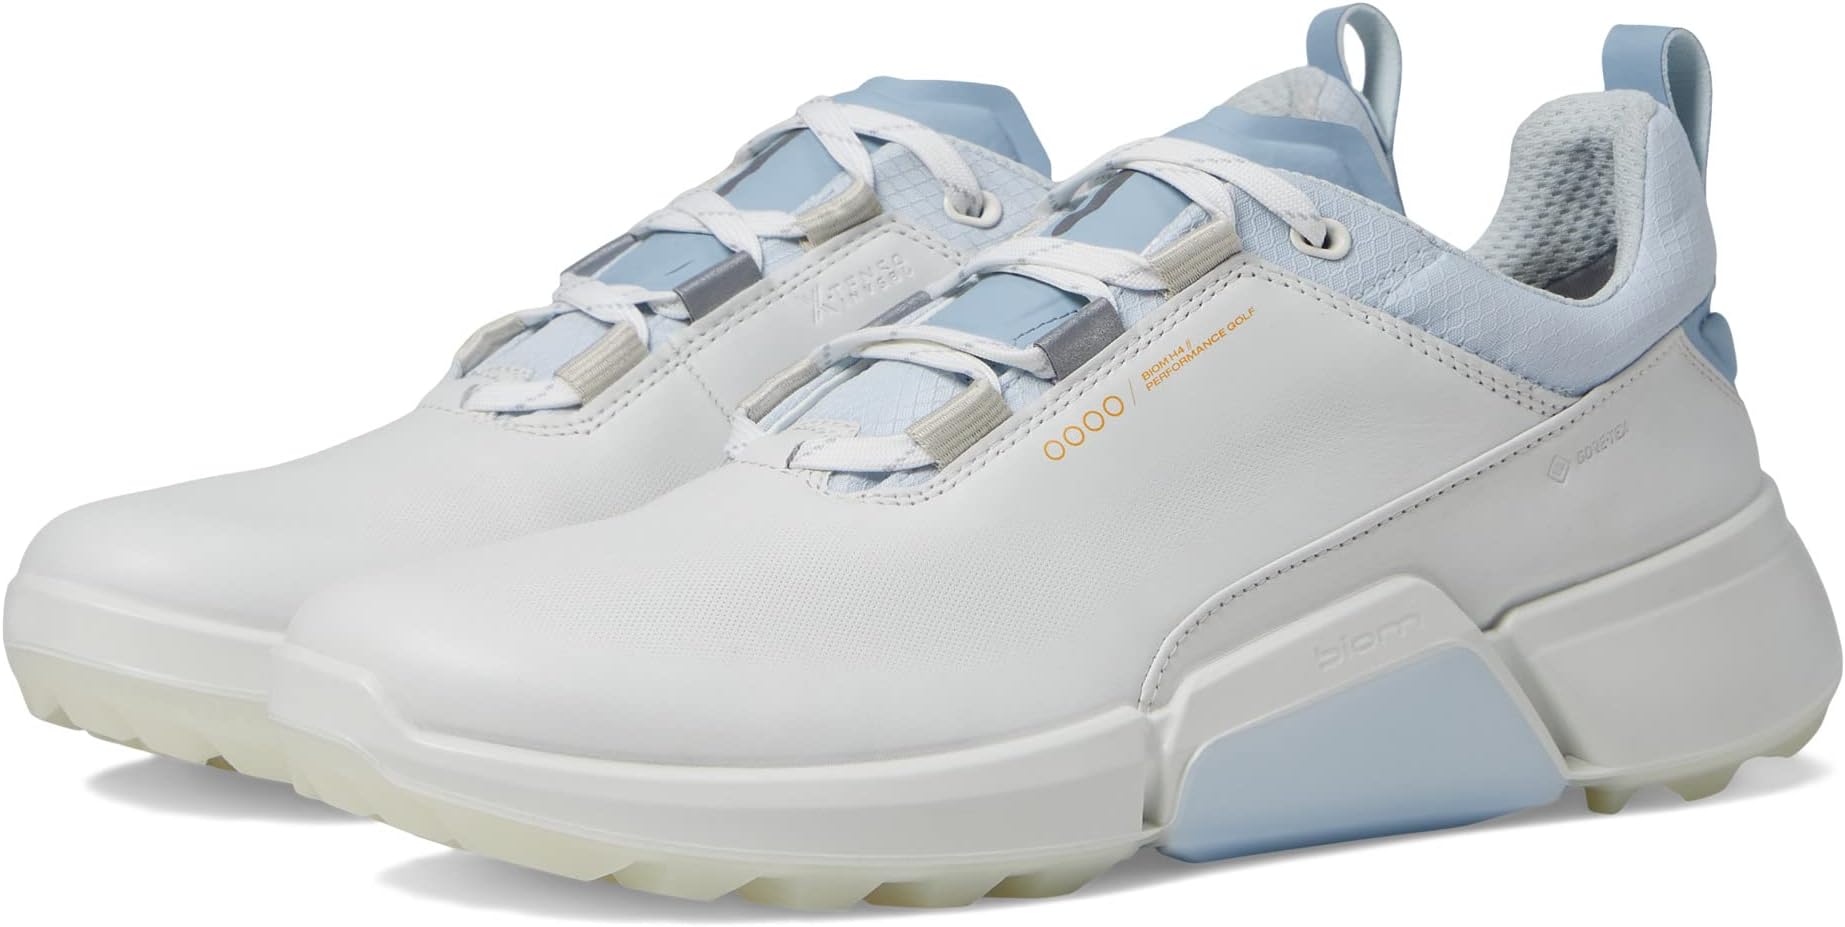 Кроссовки Biom H4 GORE-TEX Waterproof Golf Hybrid Golf Shoes ECCO, цвет White/Air Steer Leather/Textile